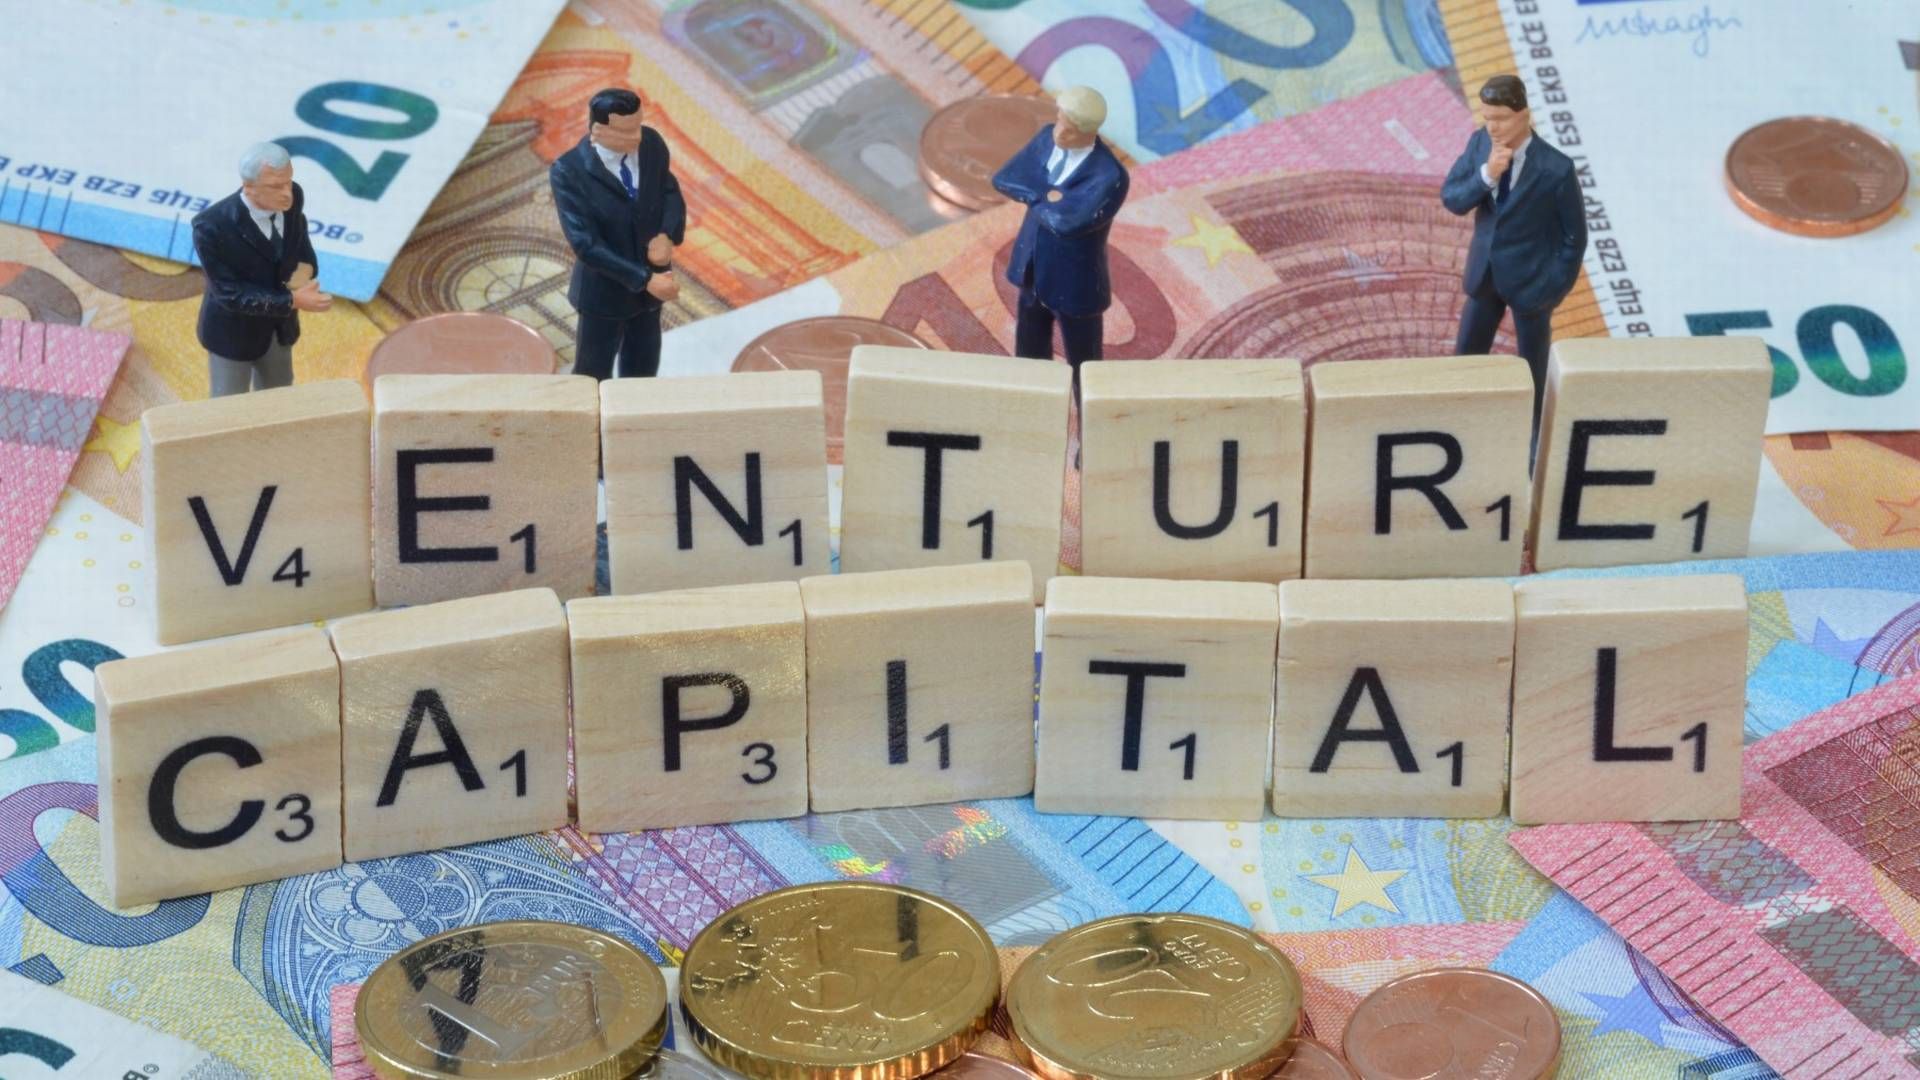 Venture Capital (Symbolbild) | Foto: picture alliance / Bildagentur-online/Joko | Bildagentur-online/Joko